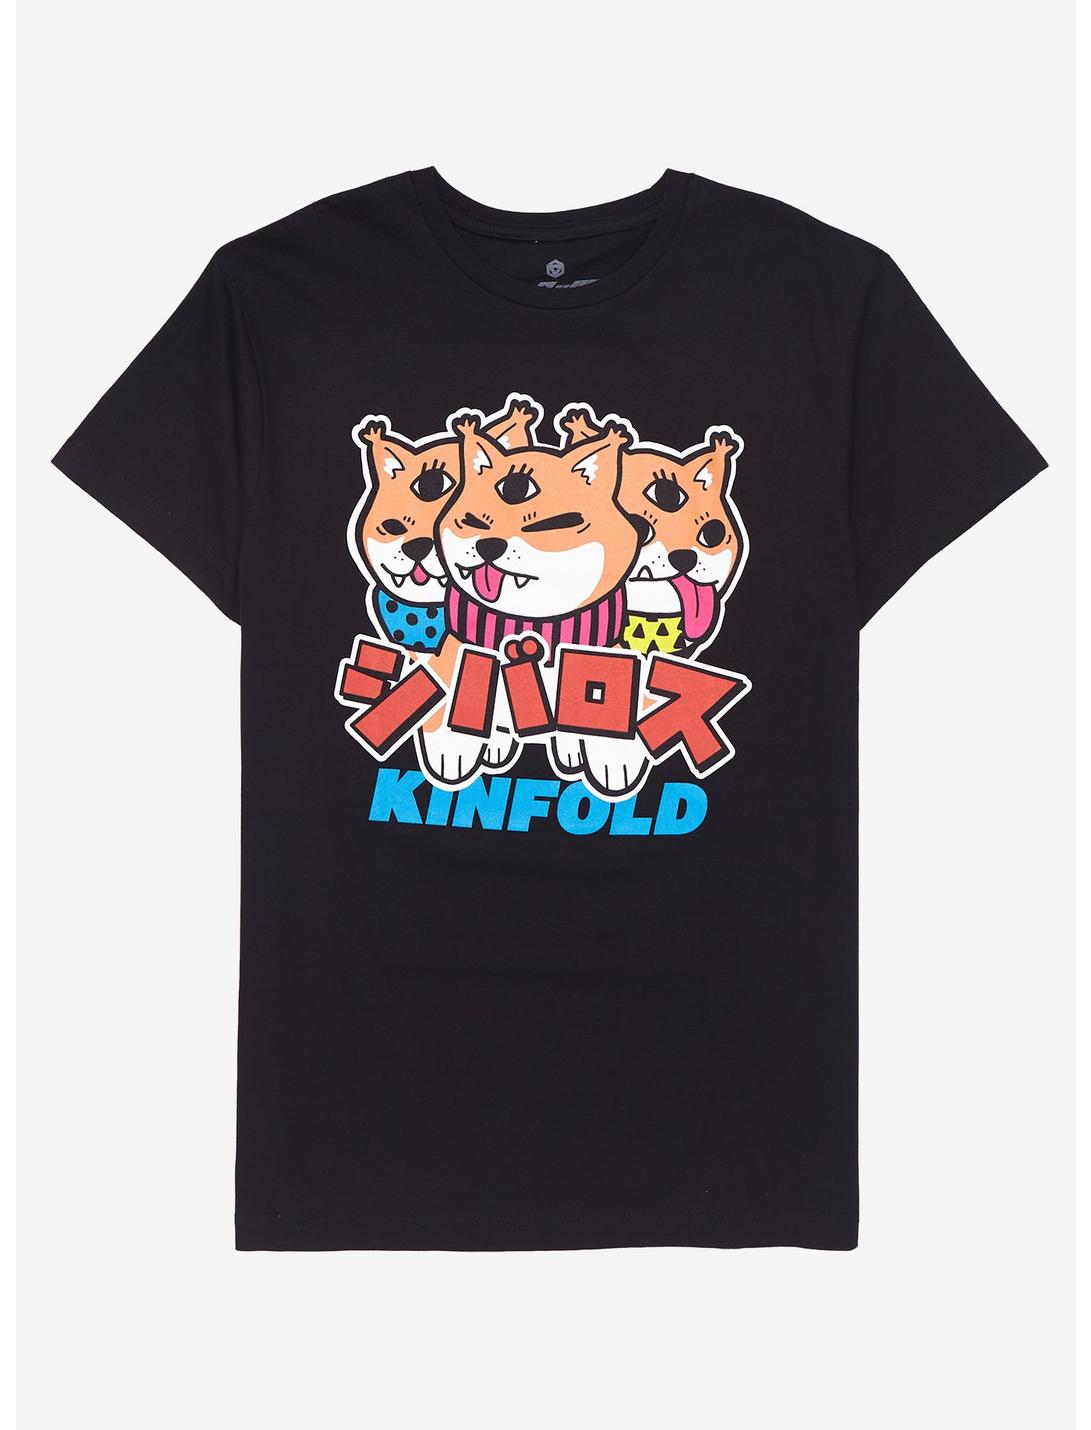 Three-Headed Shiba Kaiju T-Shirt By Kinfold, BLACK, hi-res